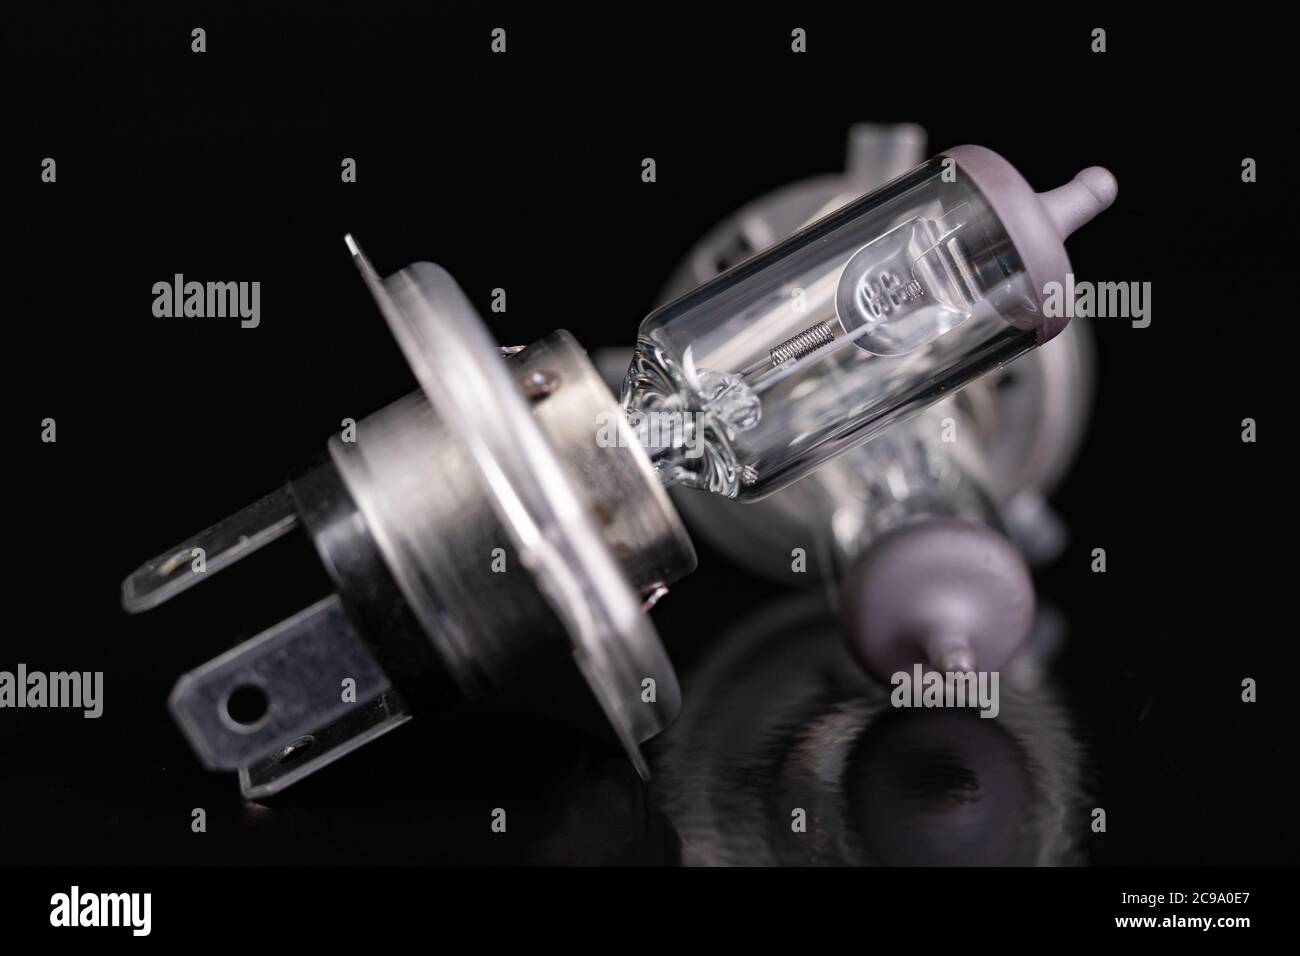 https://c8.alamy.com/comp/2C9A0E7/blown-car-light-bulbs-replaceable-car-accessories-for-headlights-dark-background-2C9A0E7.jpg